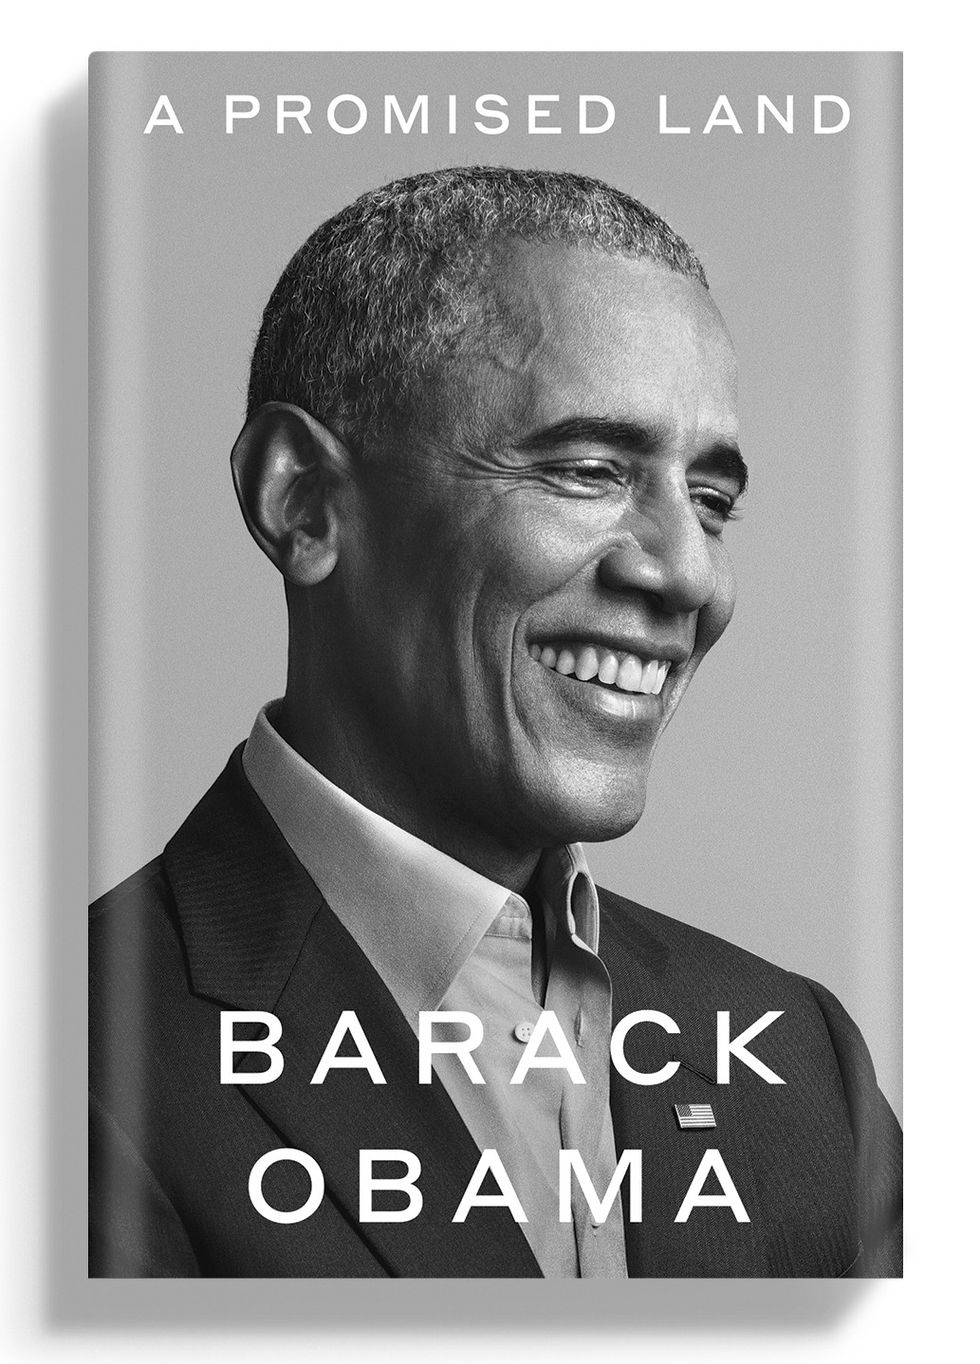 A Washington Insider, on Obama’s Book 